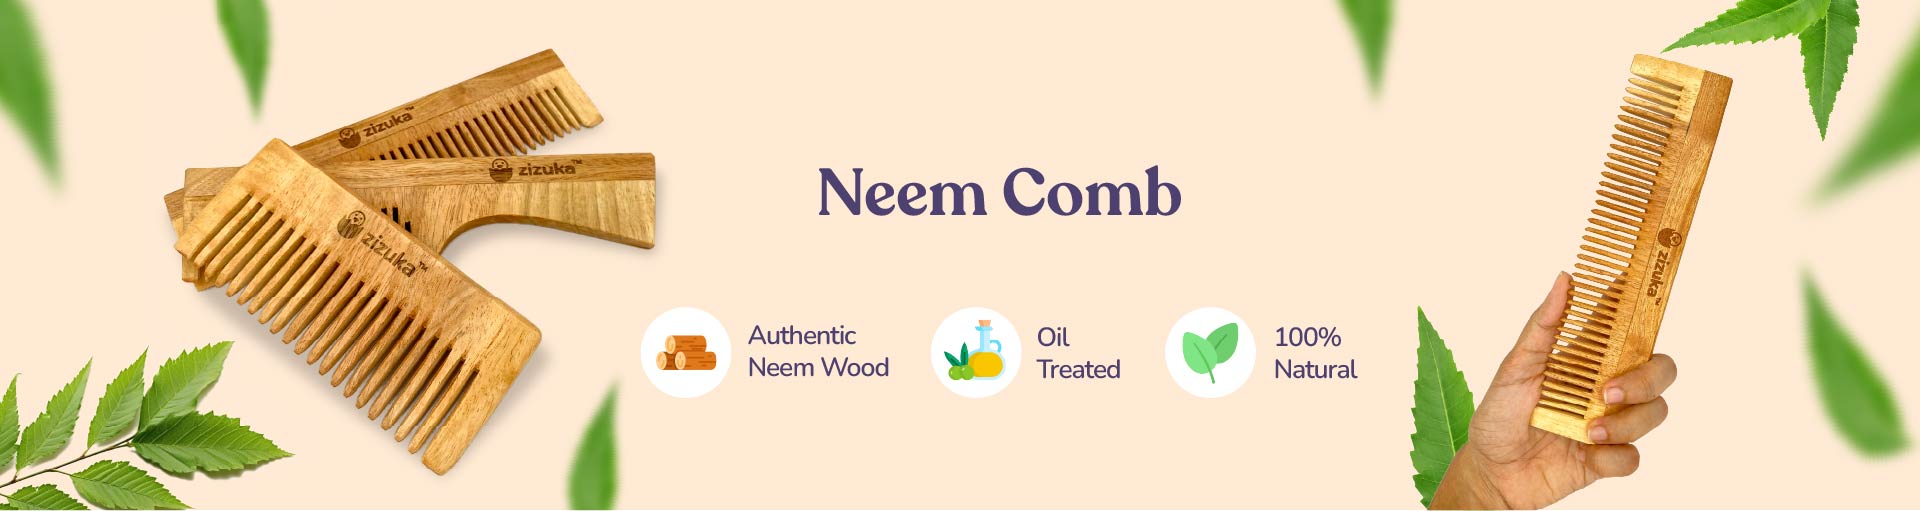 Neem Comb